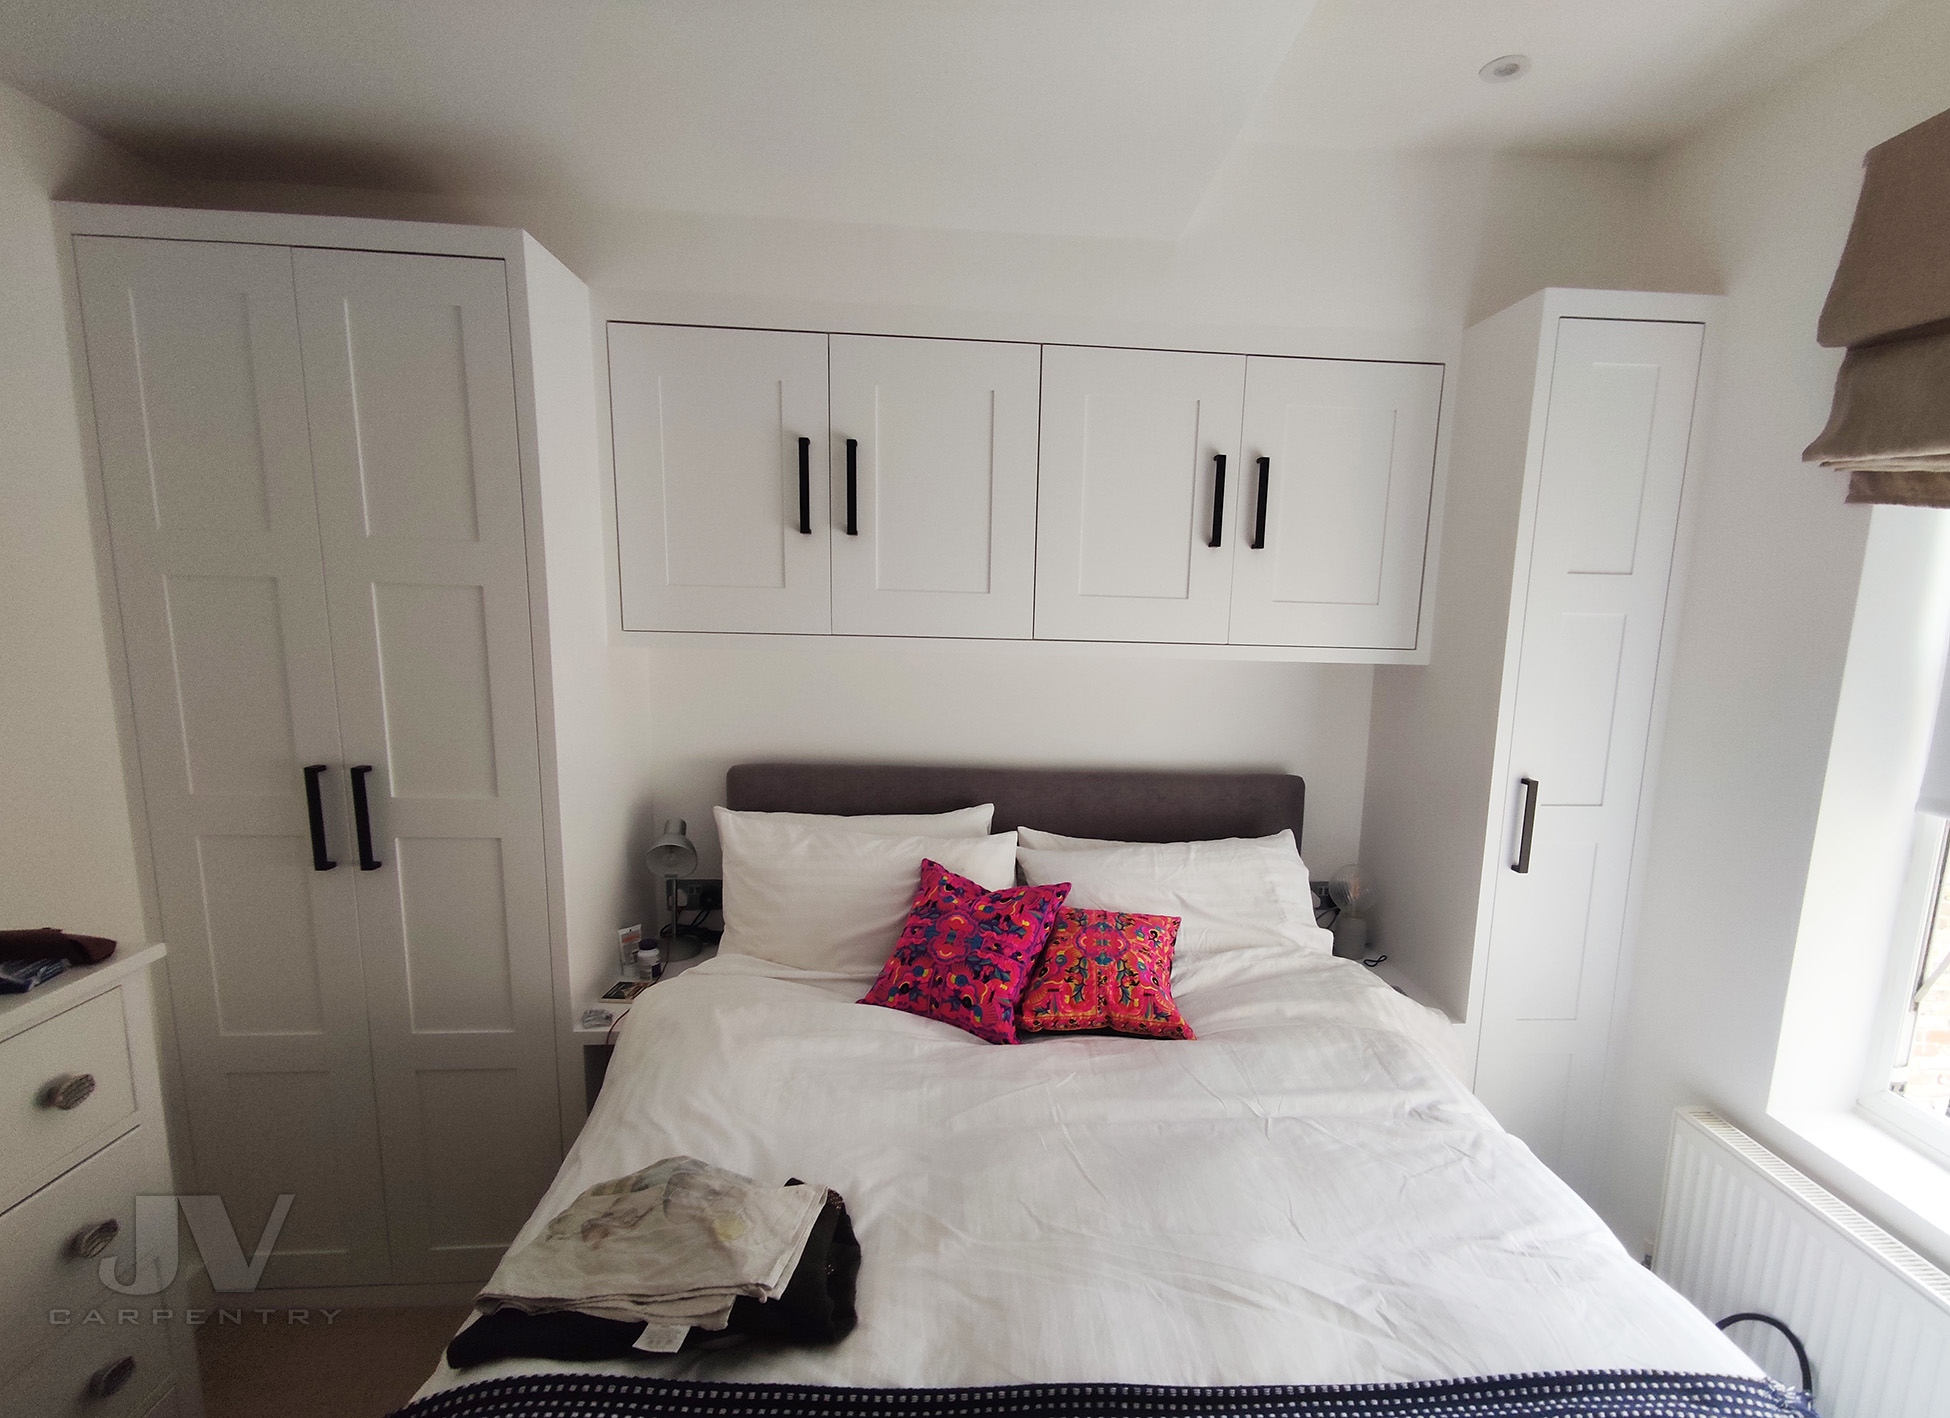 bedroom cabinets built in